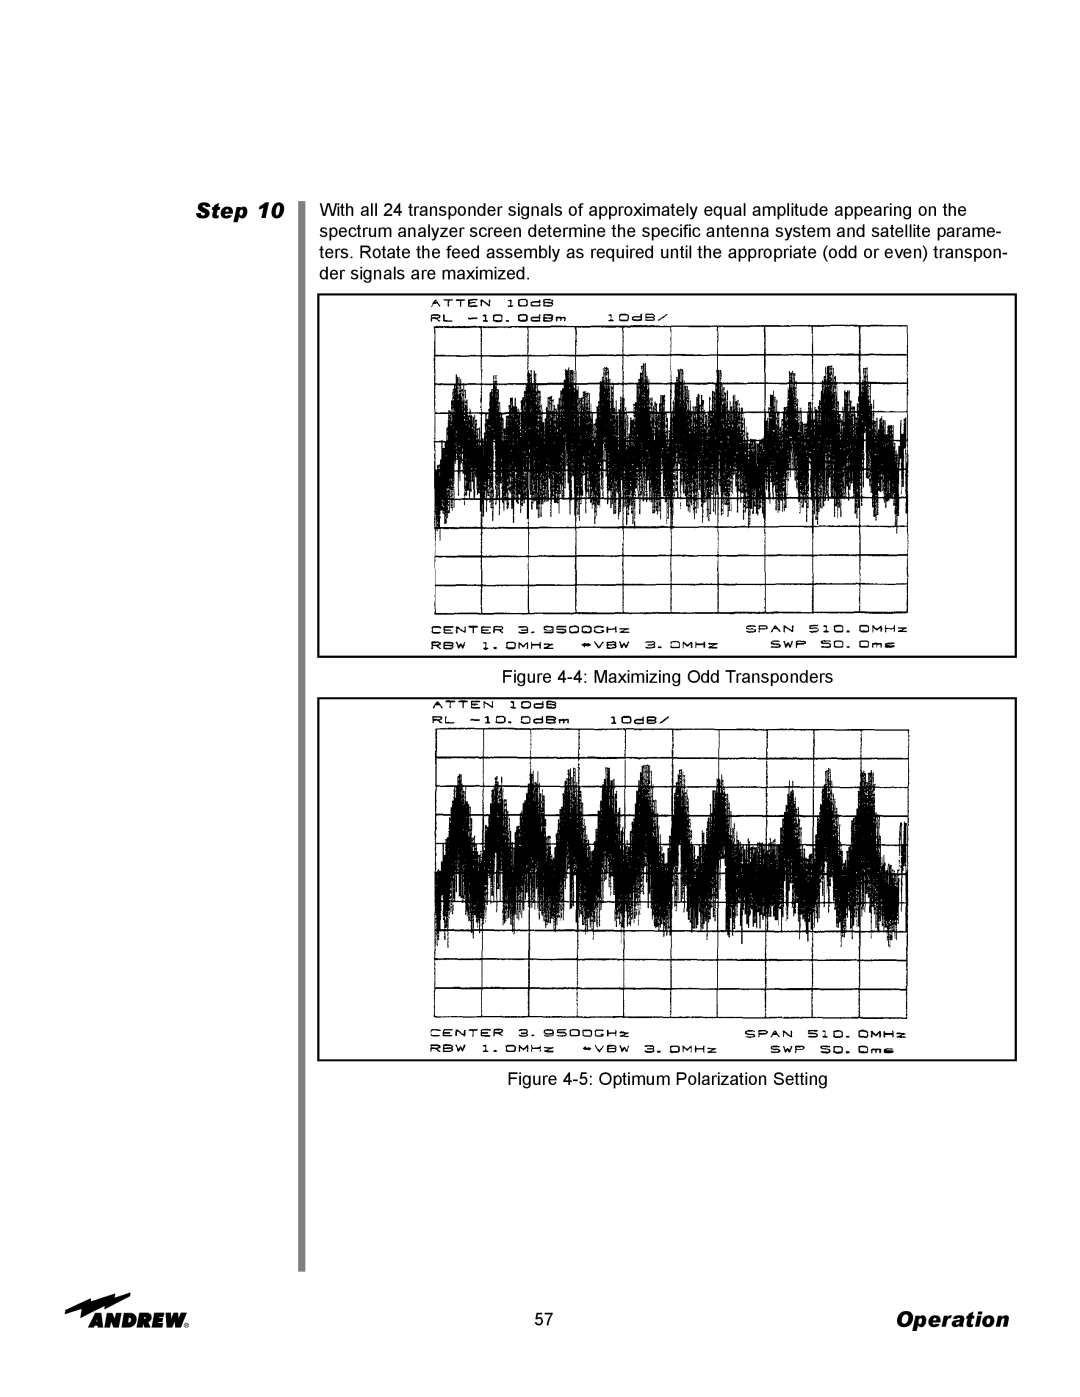 Andrew ES73 manual Step, Operation, 4:Maximizing Odd Transponders, 5:Optimum Polarization Setting 